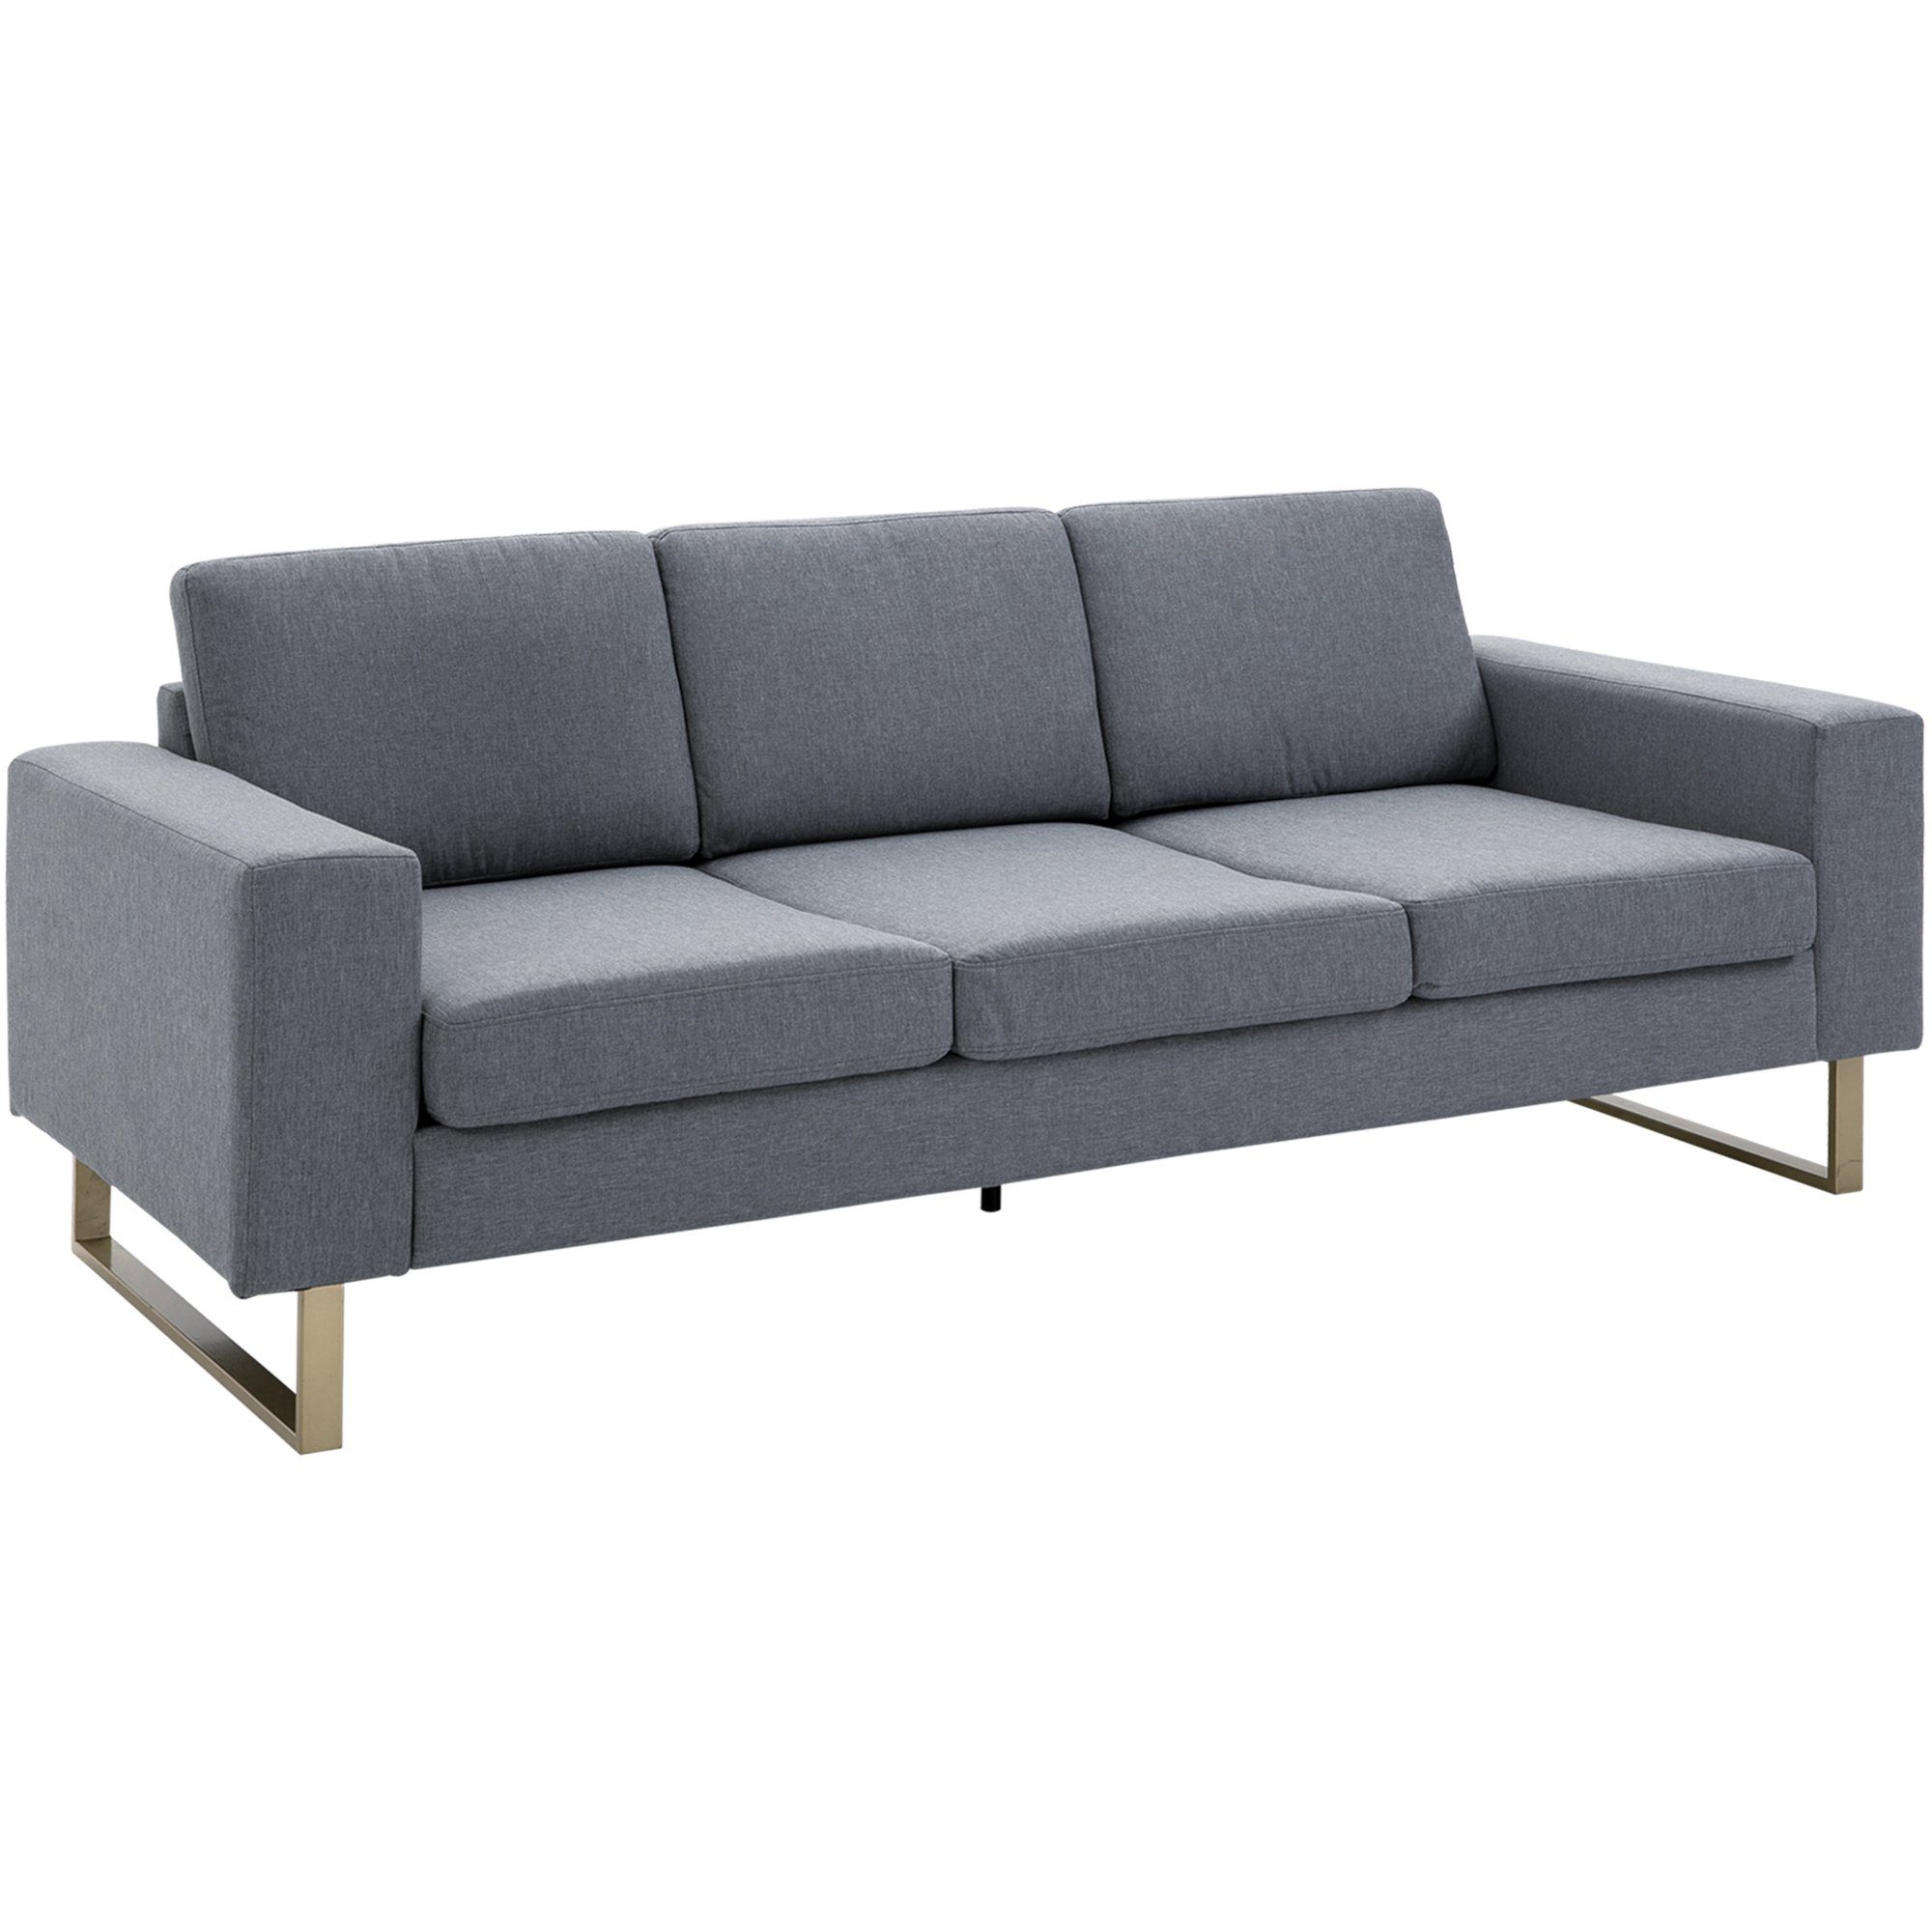 HOMCOM 3-Sitzer Sofa, Set 1 Teile, 3-Sitzer Sessel Sitzmöbel Loungesofa Armlehne